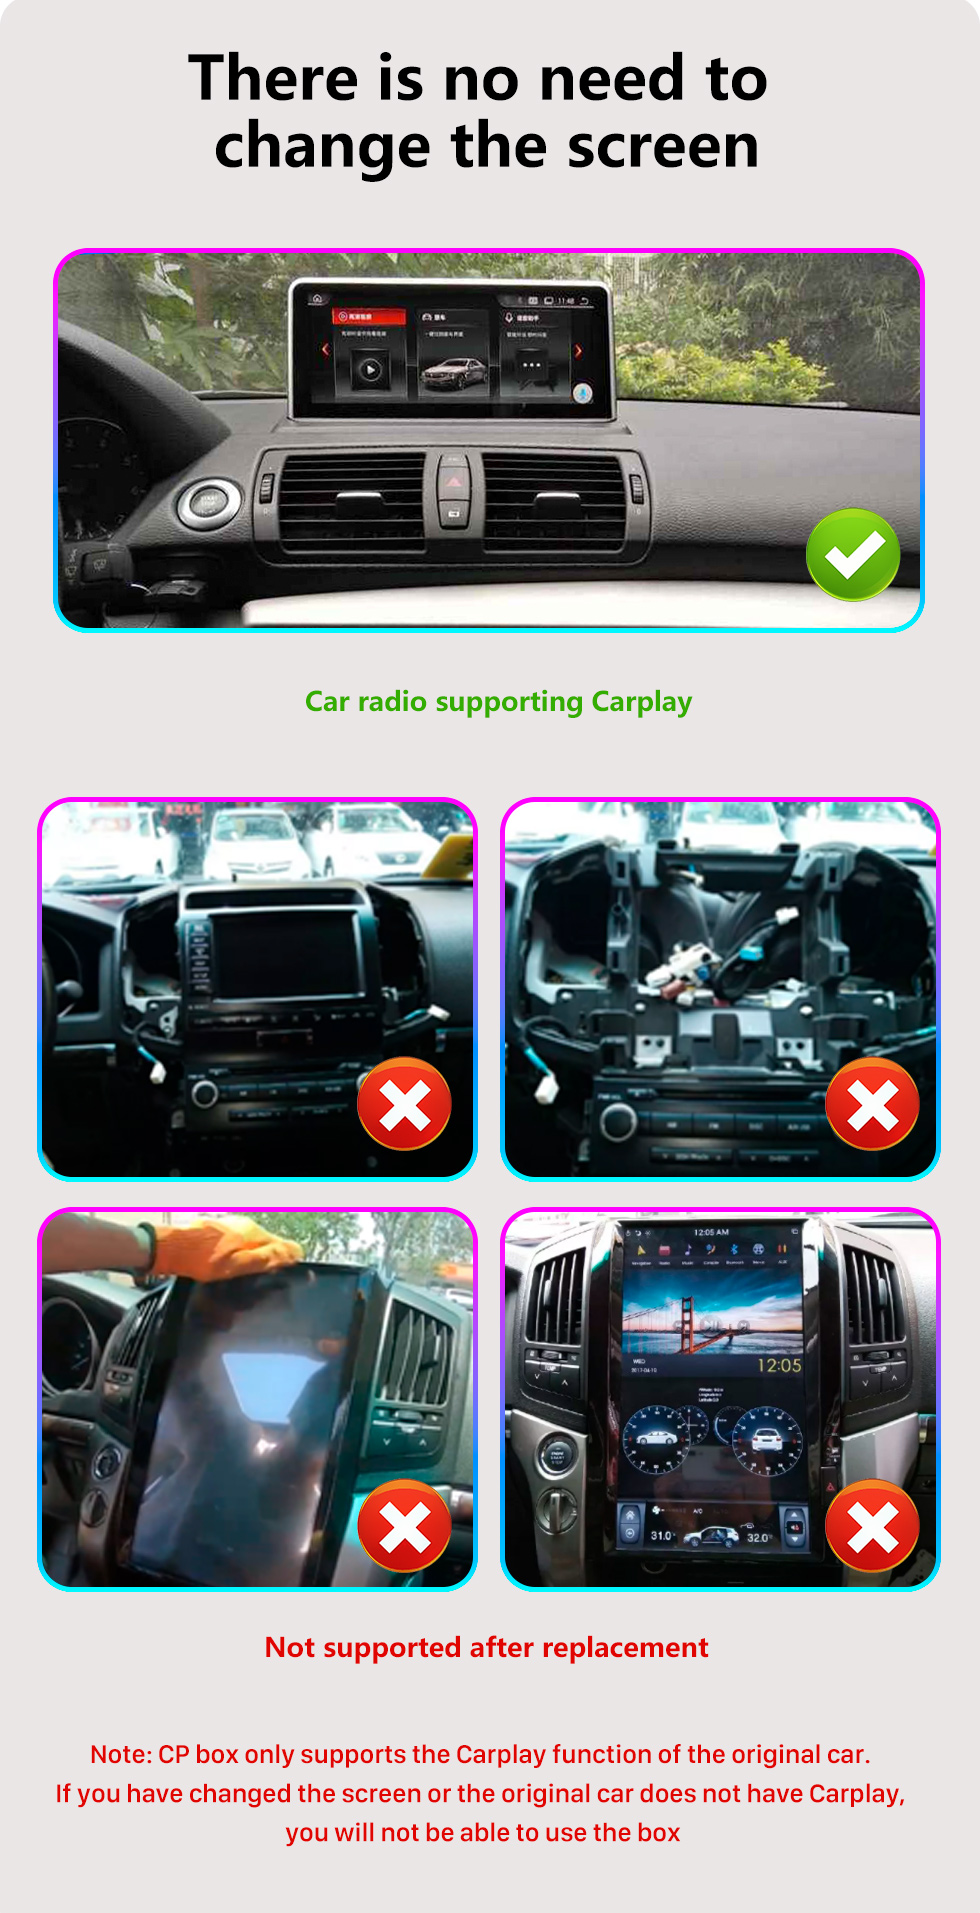 Seicane Plug and Play Wireless Carplay Adapter USB Dongle für werkseitig verkabelte Carplay Unterstützung Audi BWM Benz Ford Jeep Kia Honda VX Toyota